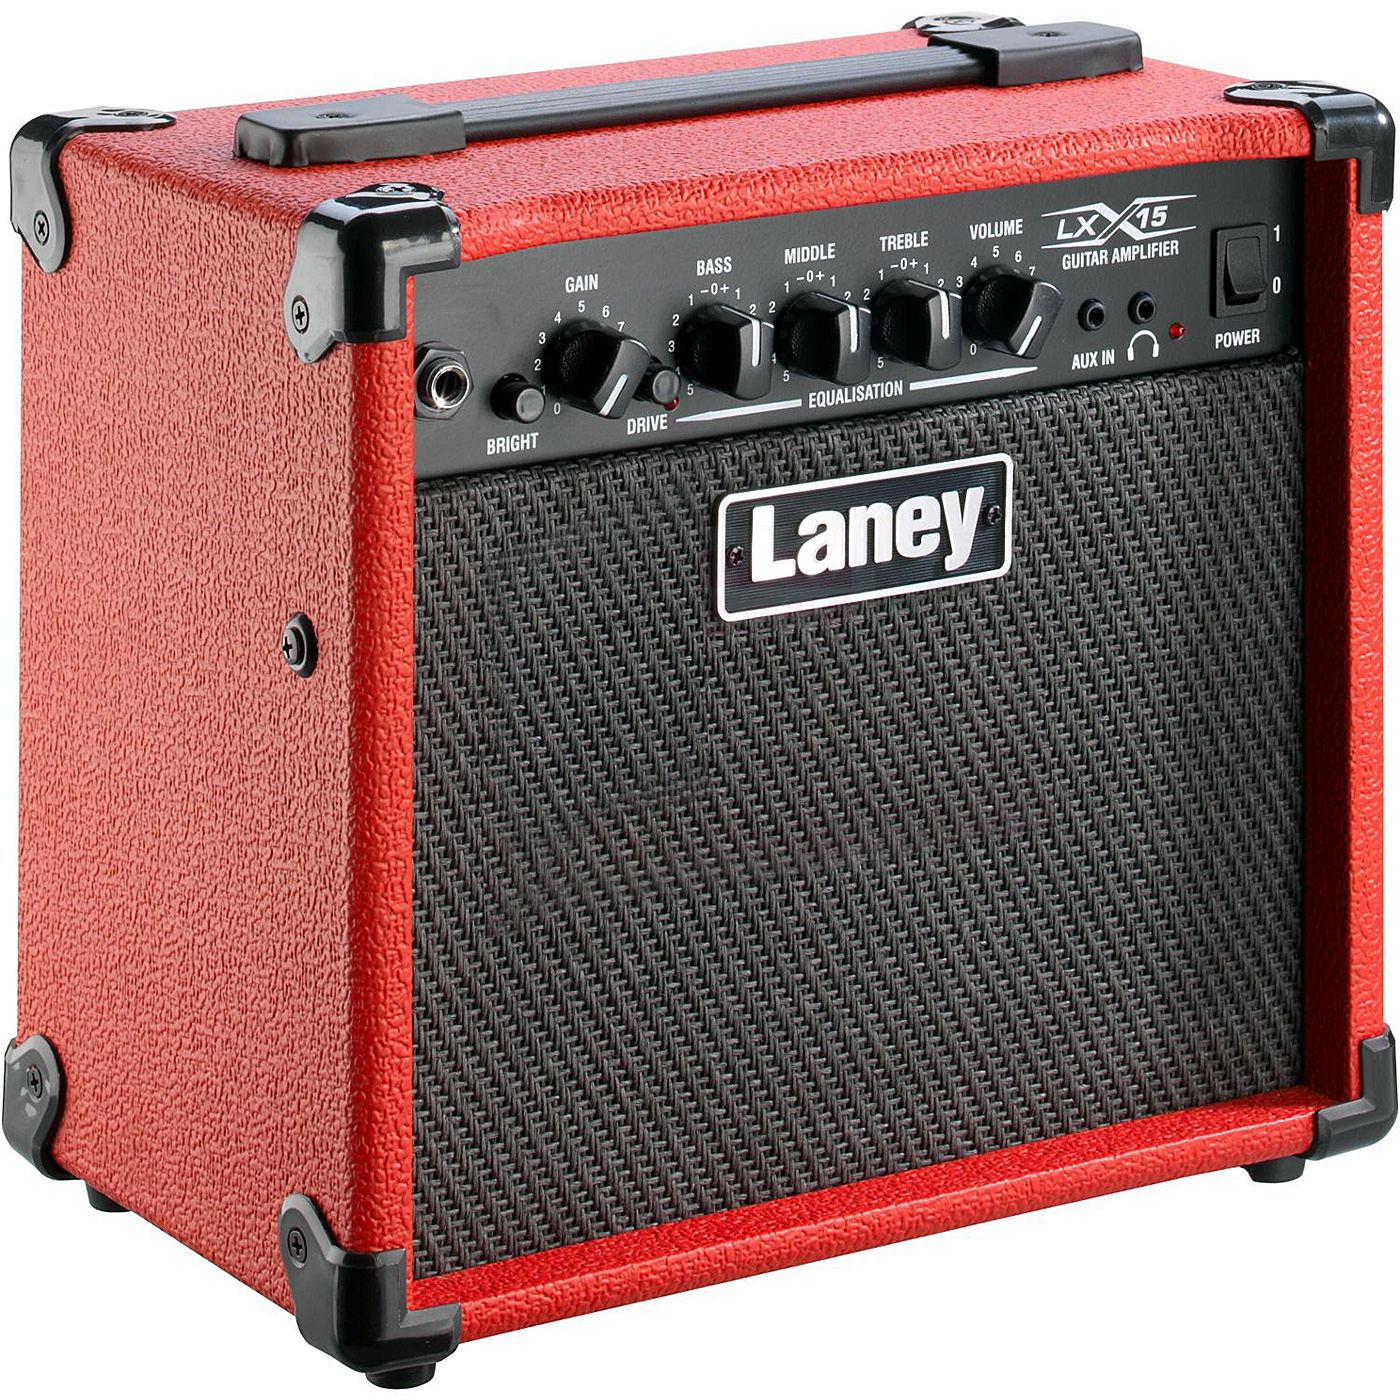 Laney Lx15 15w 2x5 Red 2016 - Combo amplificador para guitarra eléctrica - Variation 1